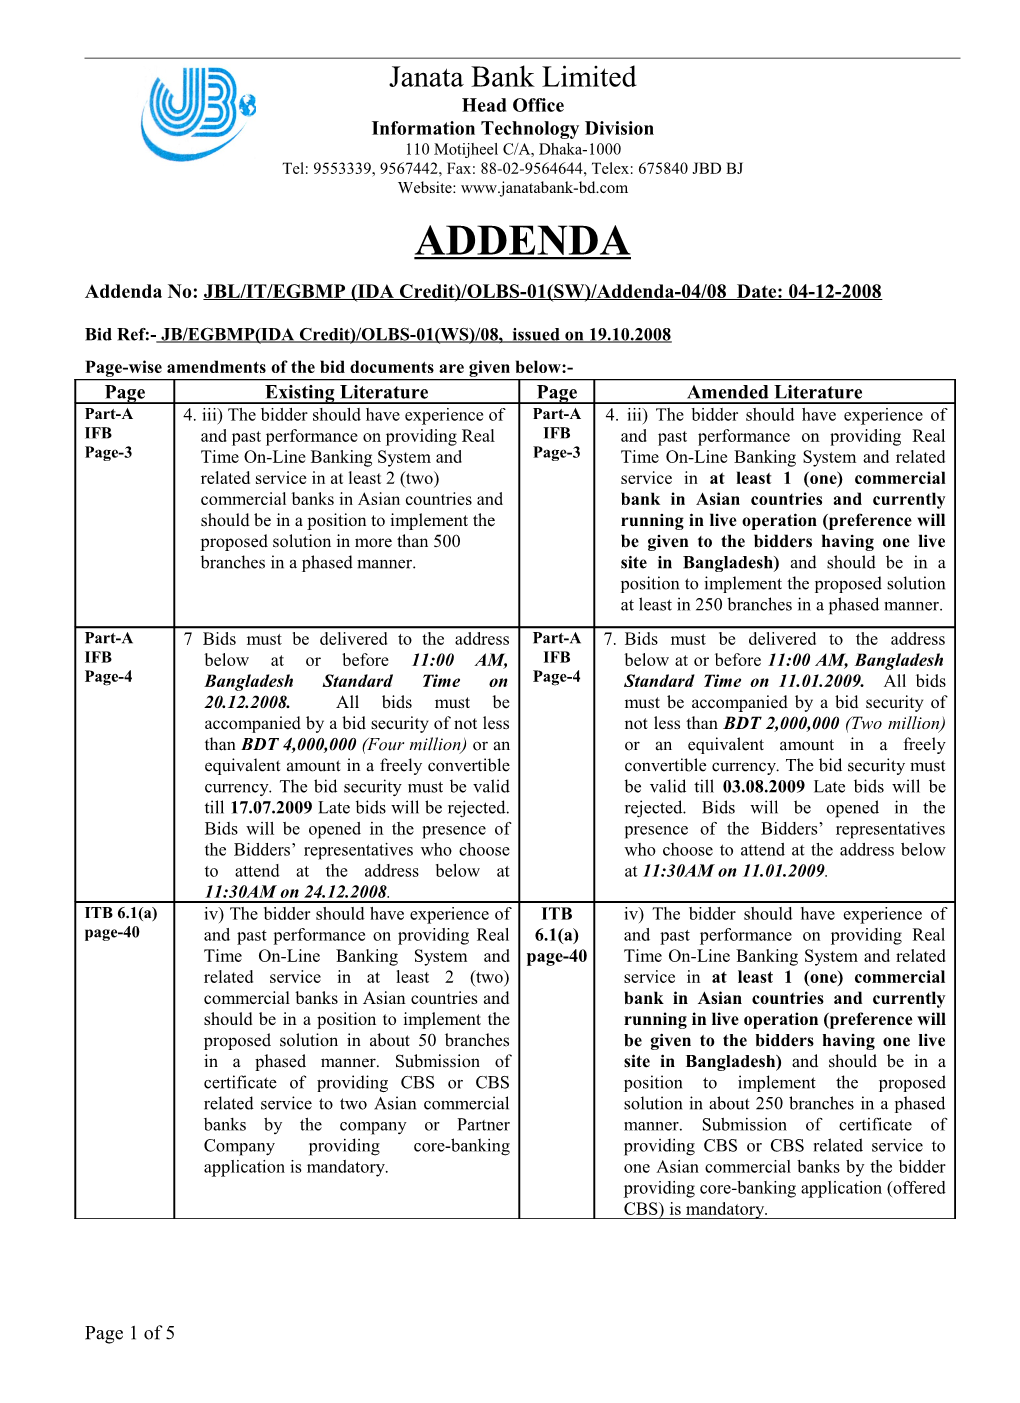 Addenda No: JBL/IT/EGBMP (IDA Credit)/OLBS-01(SW)/Addenda-04/08 Date: 04-12-2008